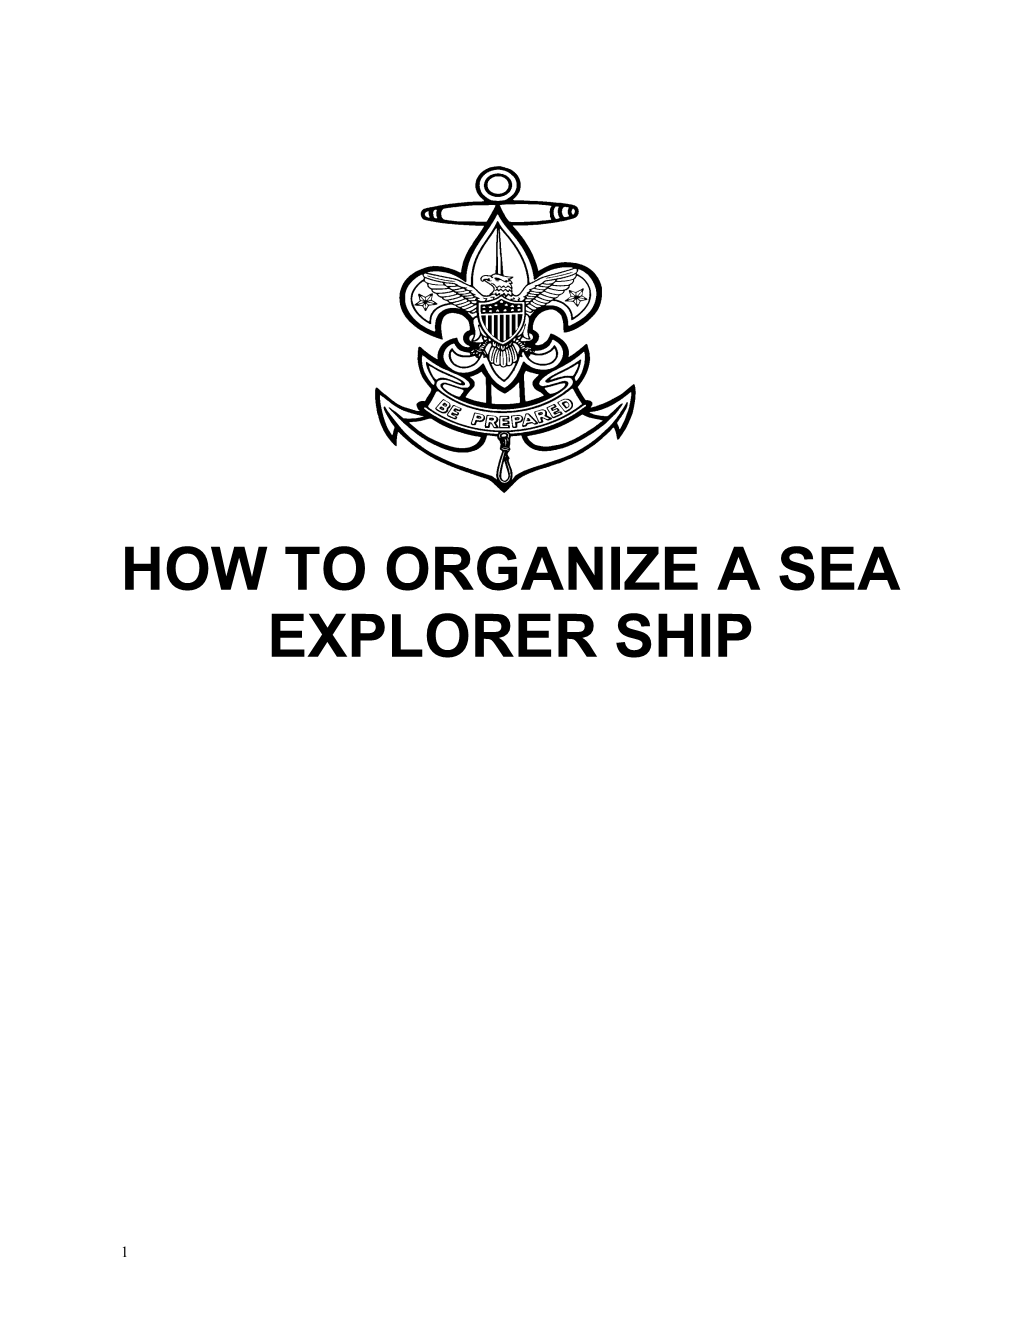 How to Organize a Sea Explorer Ship